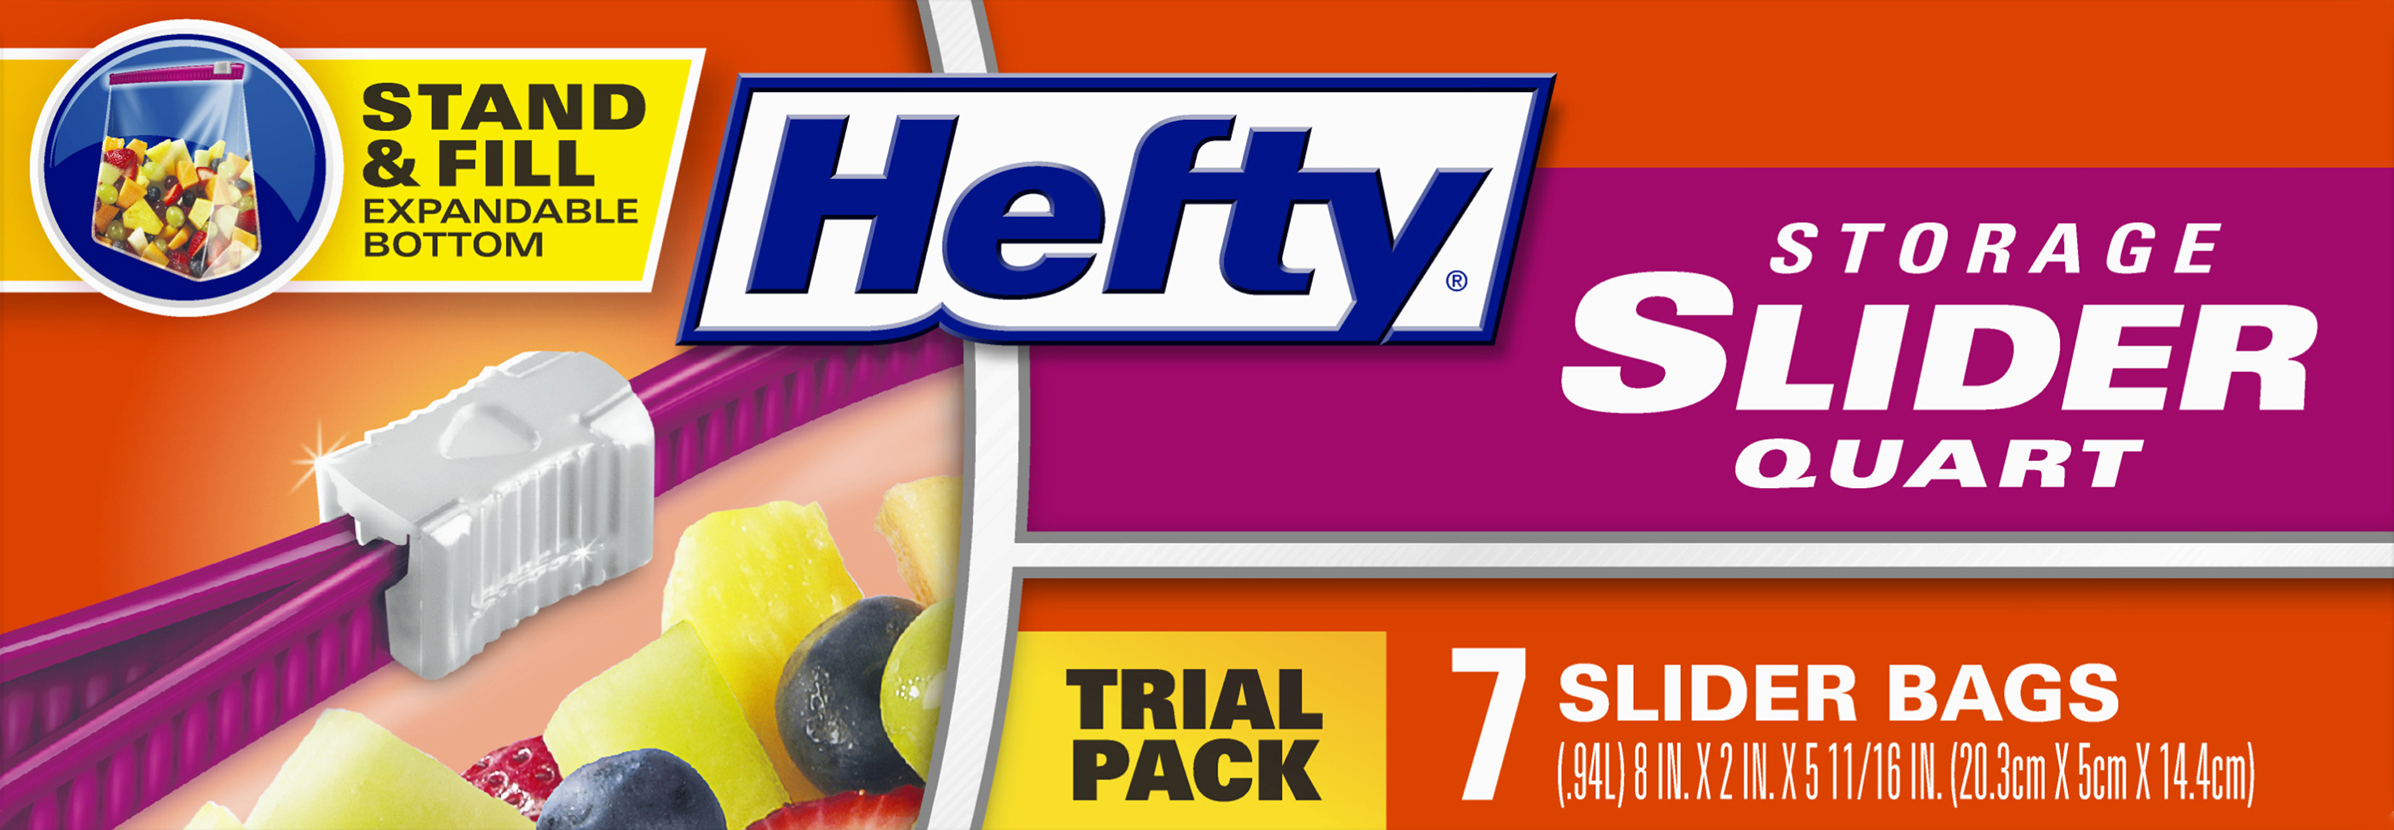 Hefty Trial Pack Quart Slider Storage Bags 7 ea